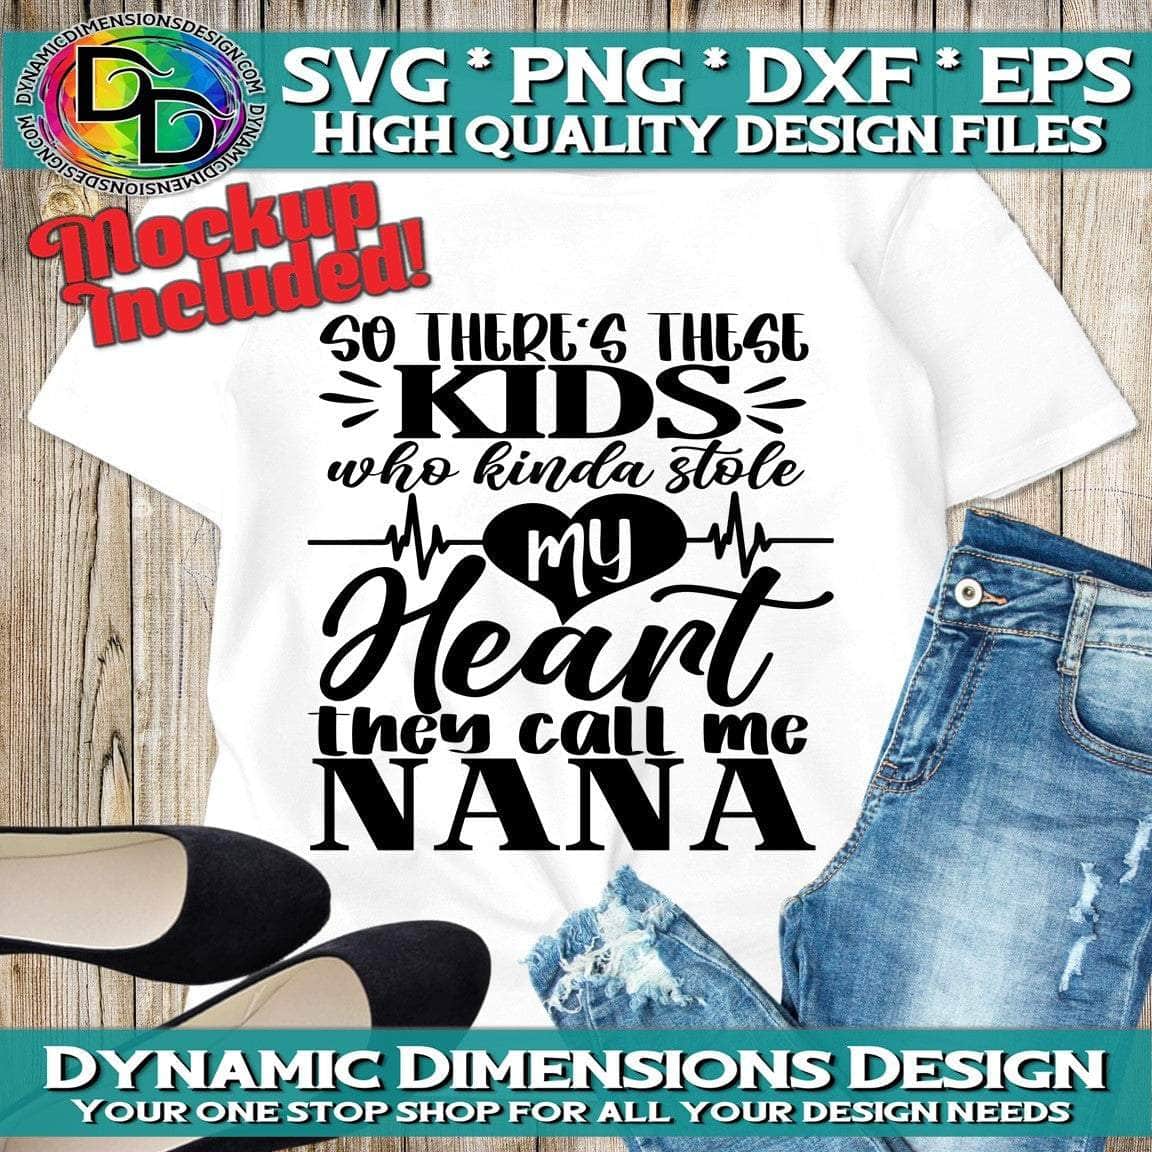 Stole My Heart _ Calls me Nana svg, png, instant download, dxf, eps, pdf, jpg, cricut, silhouette, sublimtion, printable